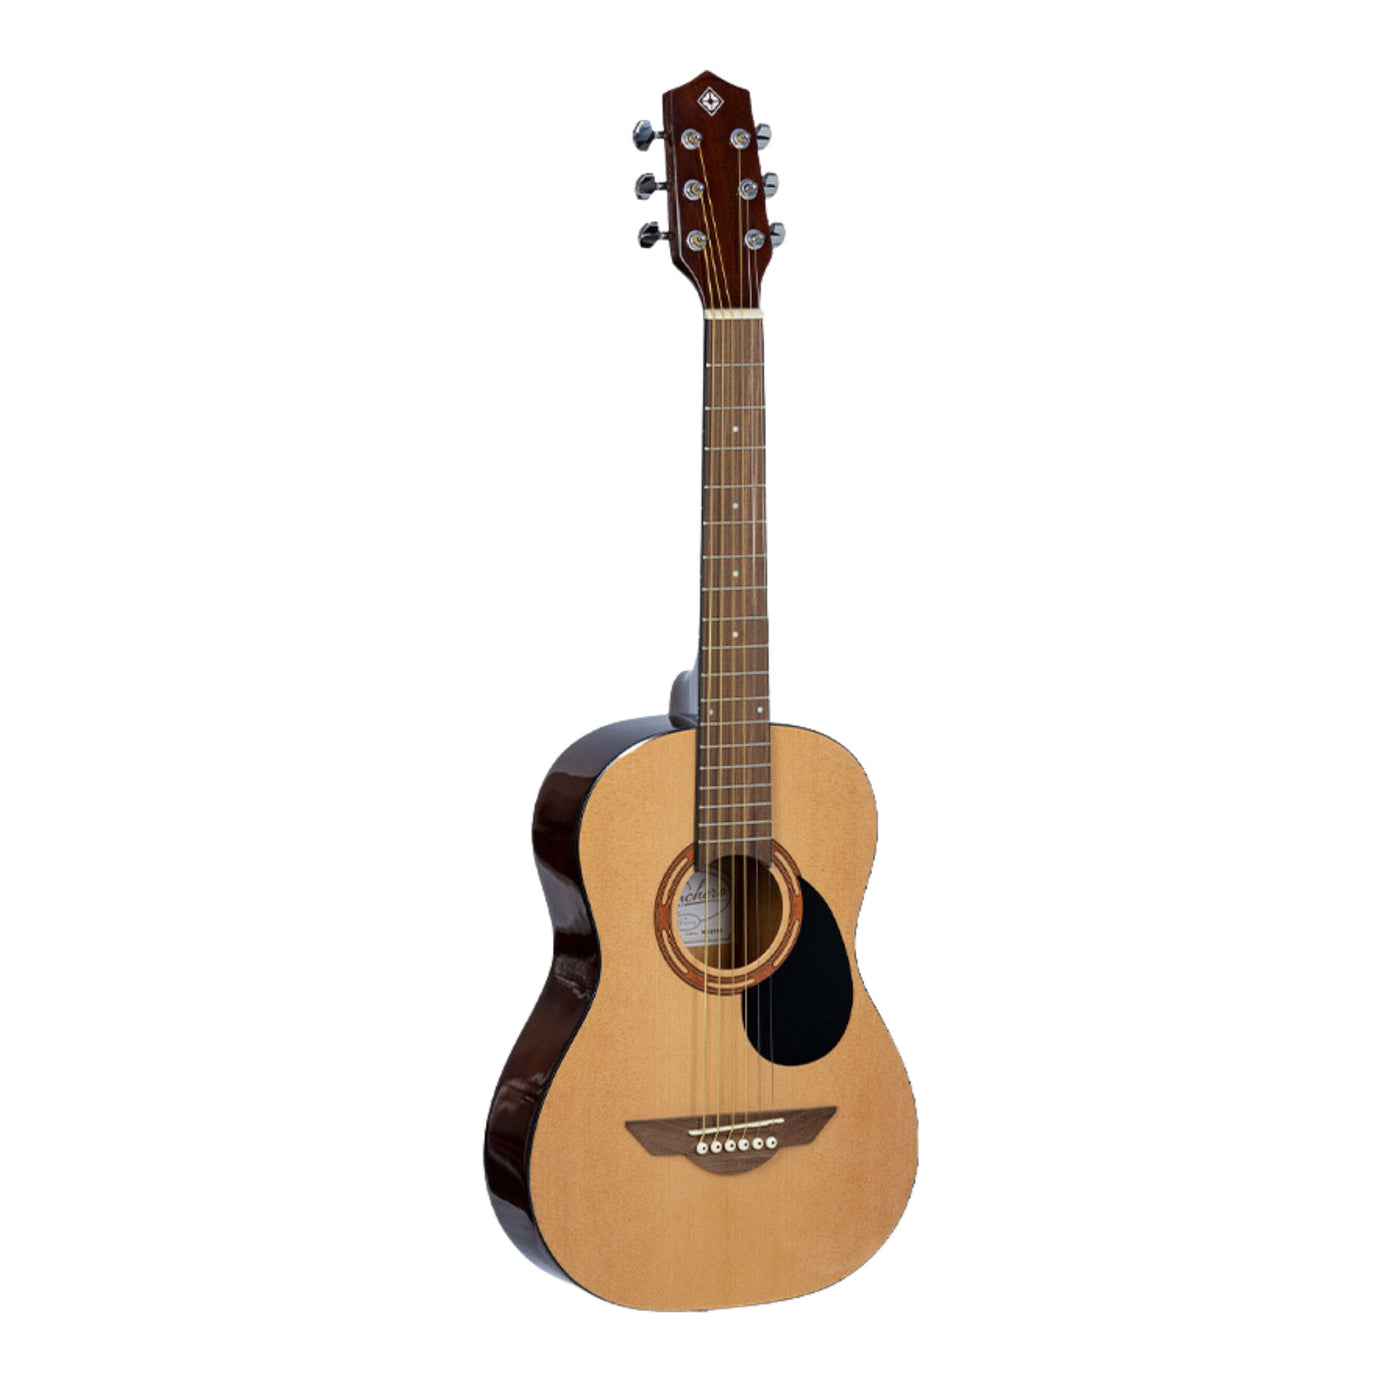 H. Jimenez LGR50S Ranchero Series 1/2 Size Steel String Guitar with Padded Gig Bag